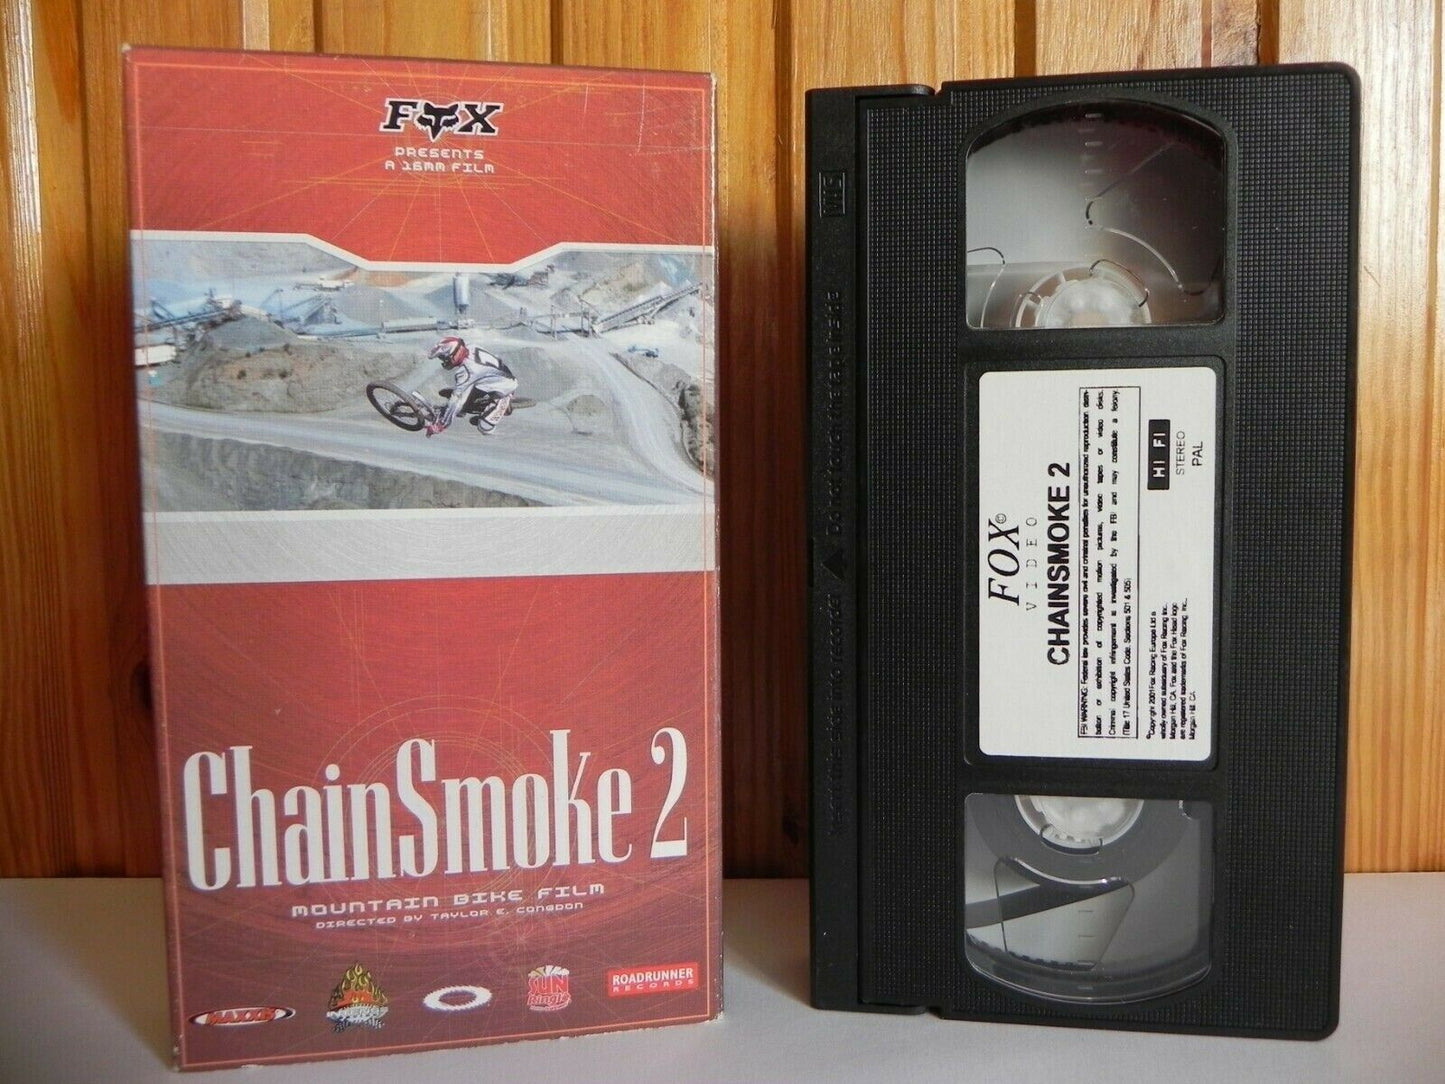 ChainSmoke 2: Mountain Bike Film - Brian Lopes - Marla Streb - Eric Carter - VHS-